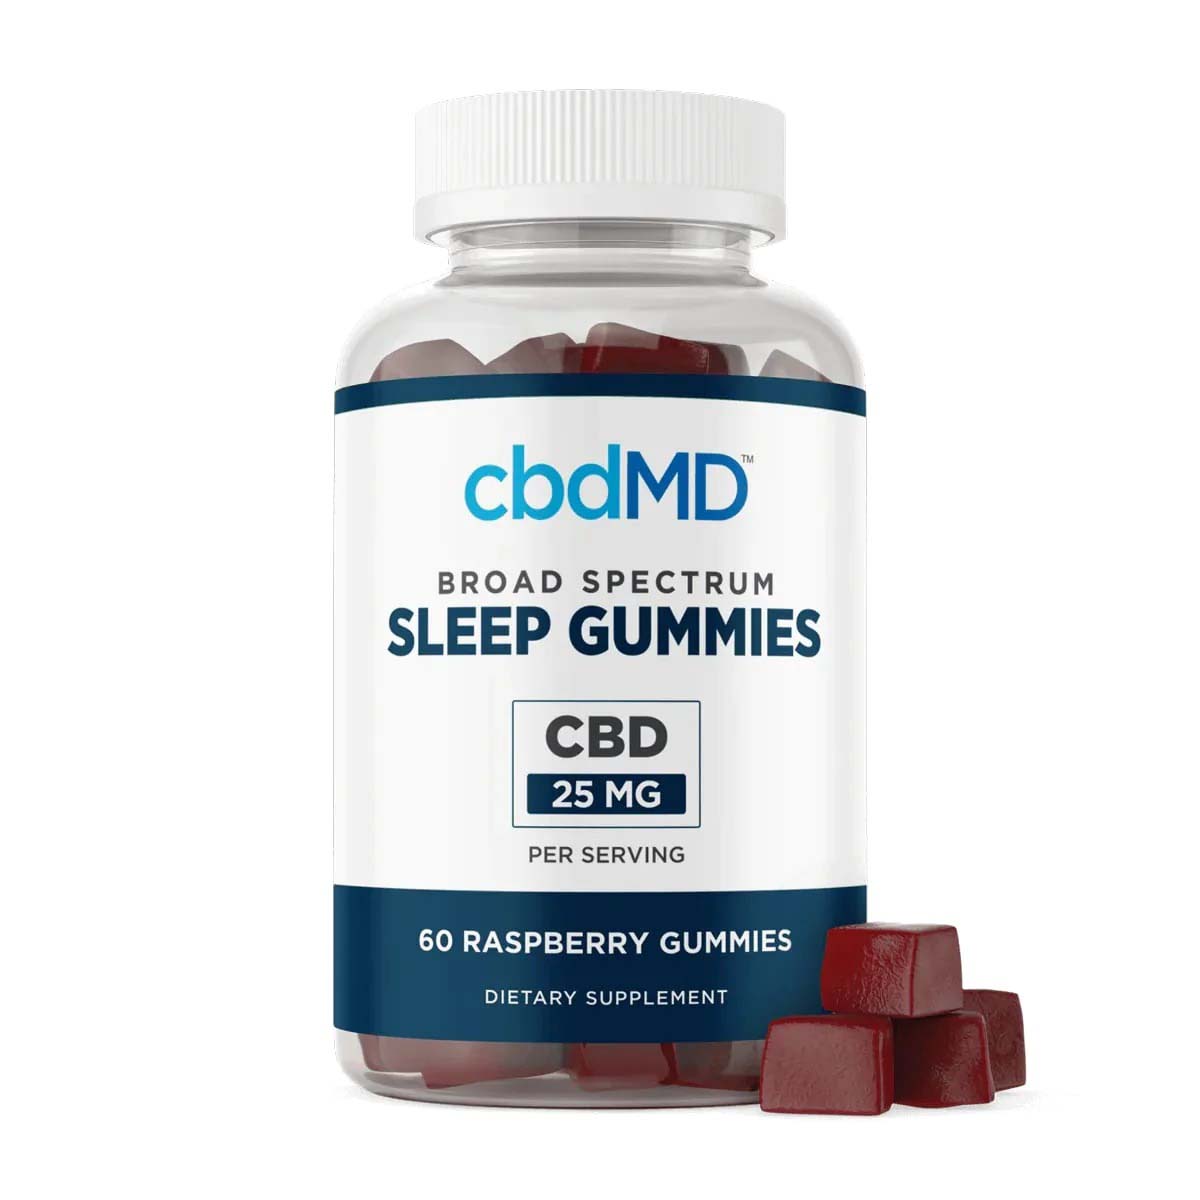 a bottle of cbdMD Broad Spectrum CBD Sleep Gummies in Raspberry flavor